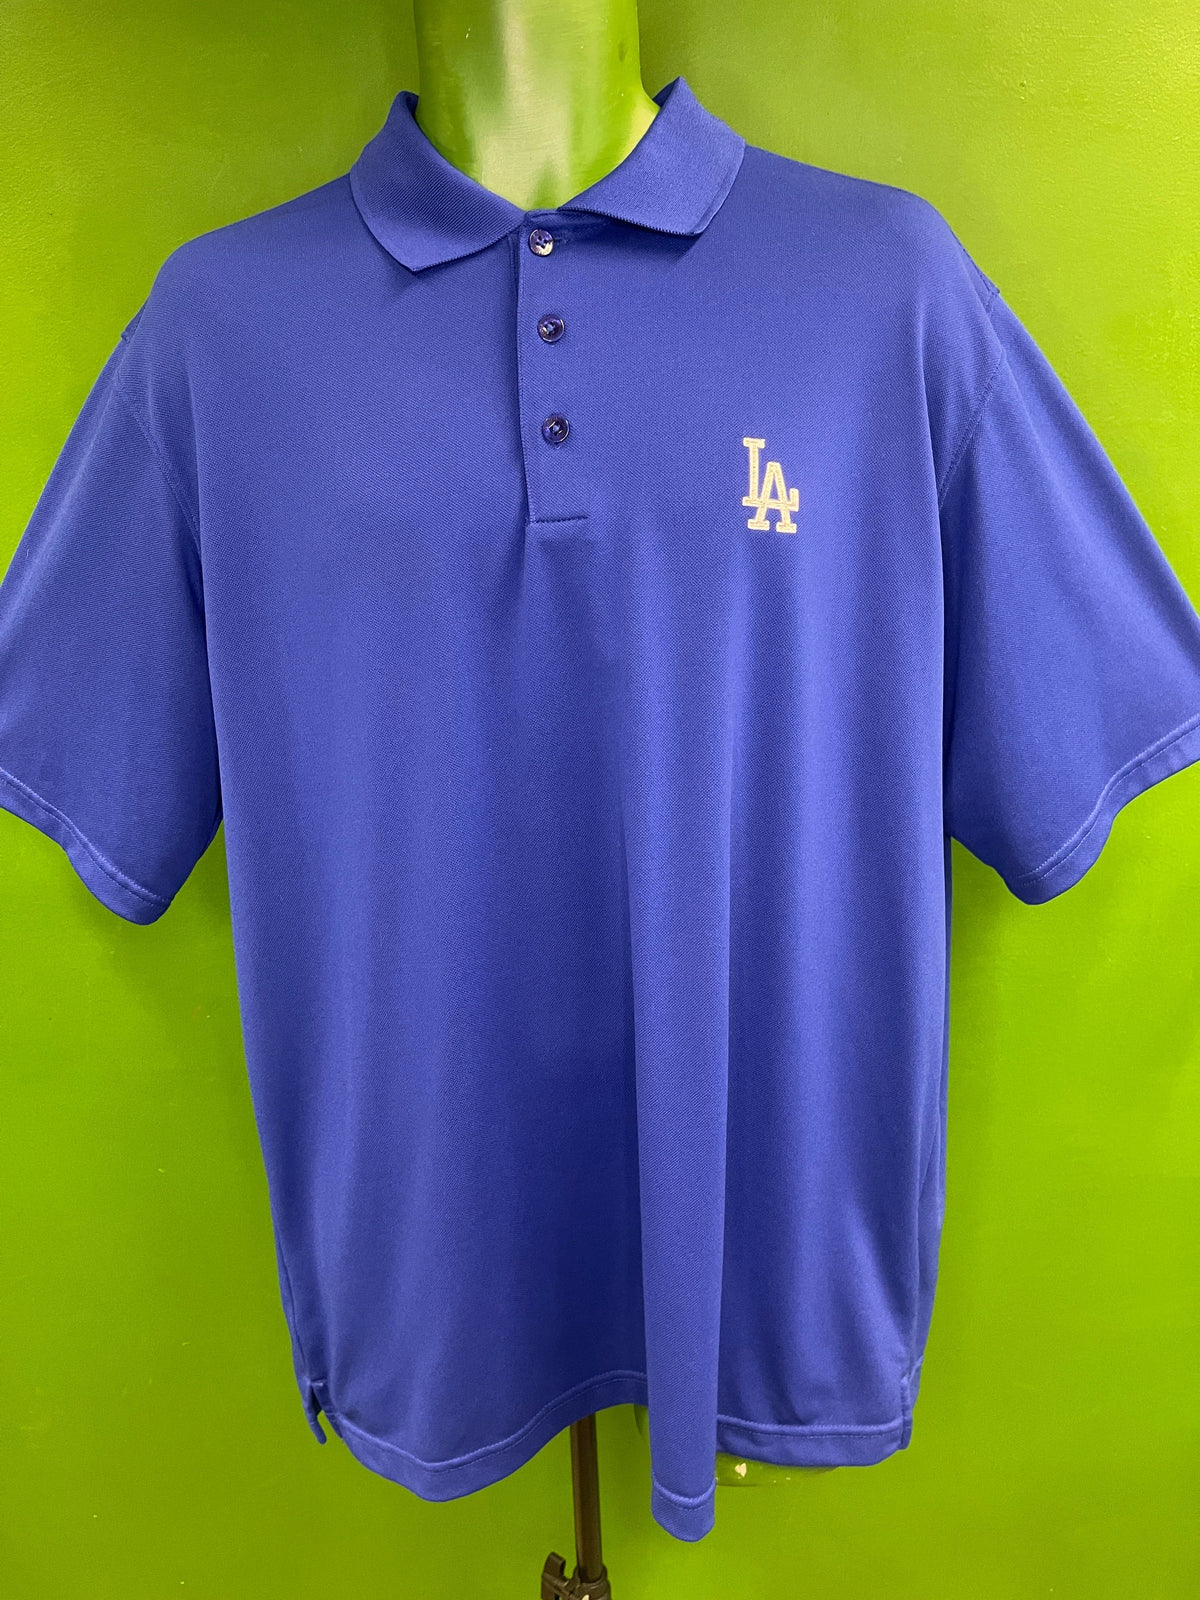 MLB Los Angeles Dodgers Antigua Golf Polo Shirt Men's Large